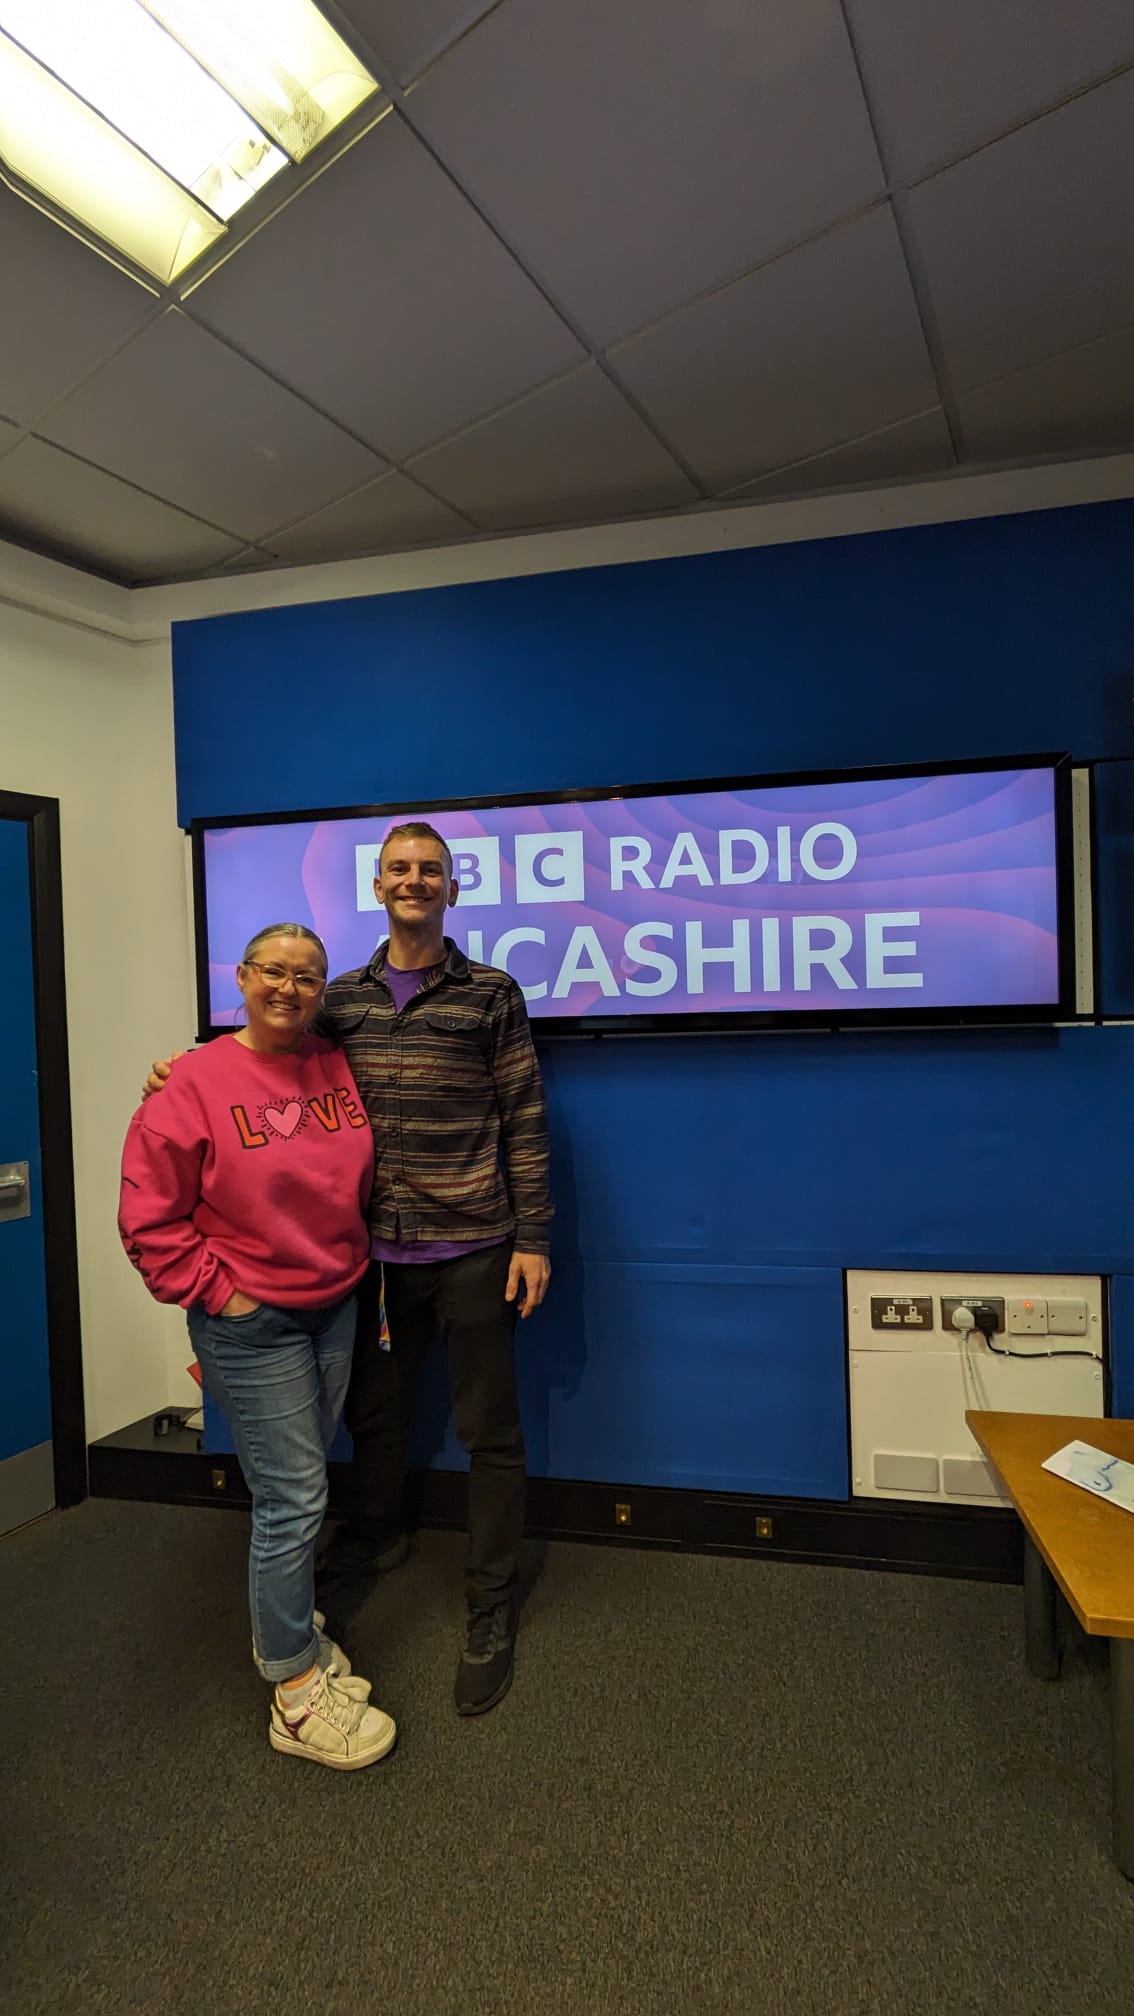 Thank you BBC Radio Lancashire